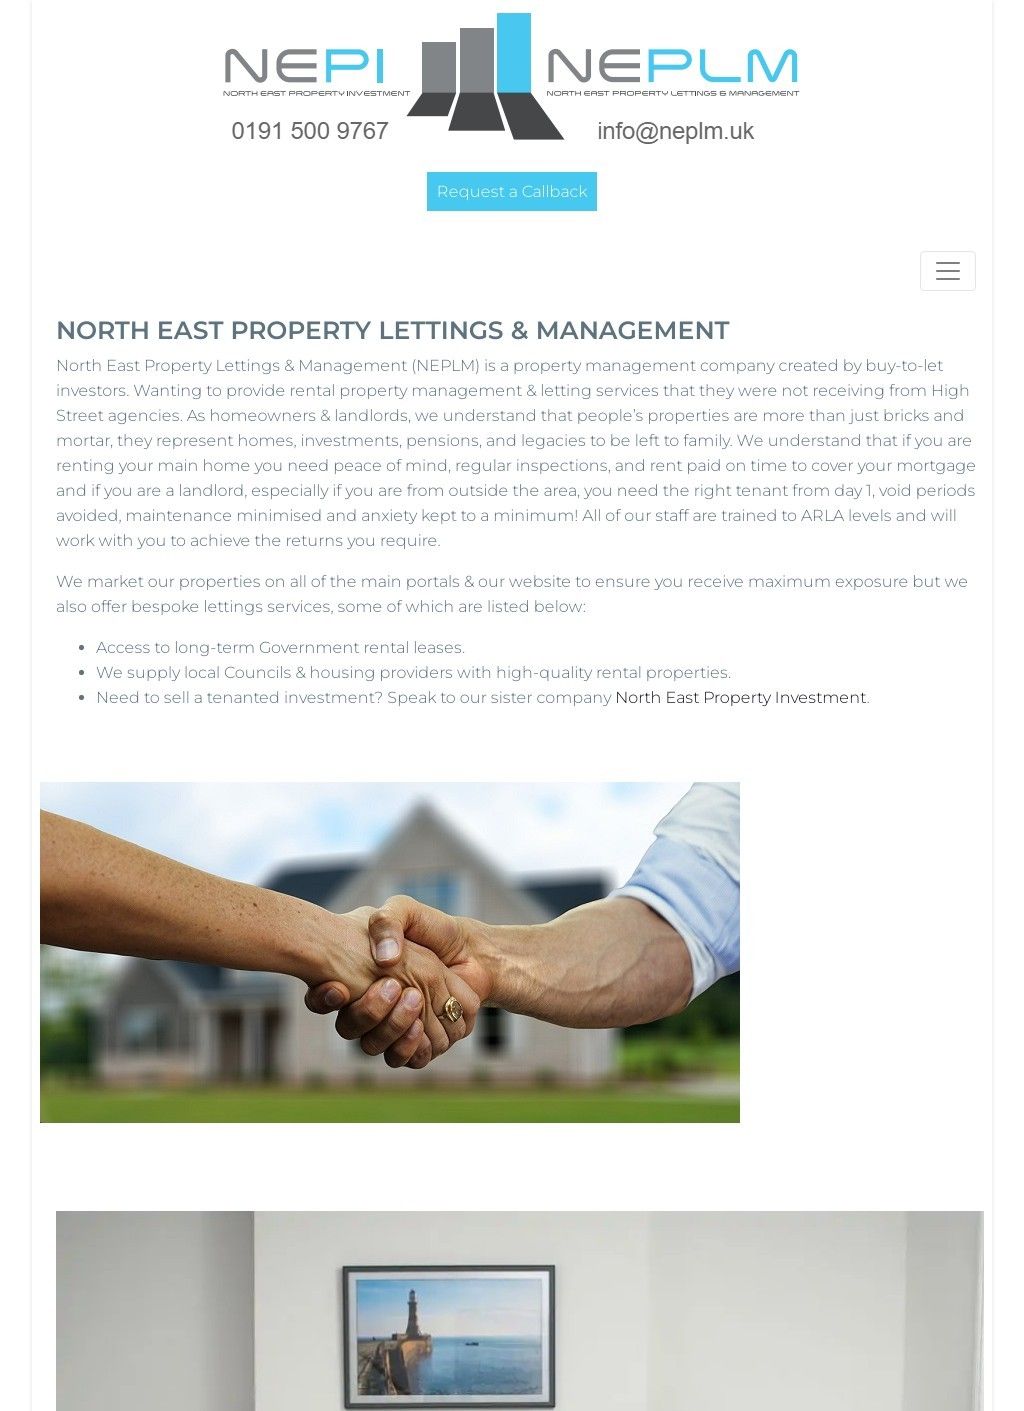 NEPLM Property Management Company